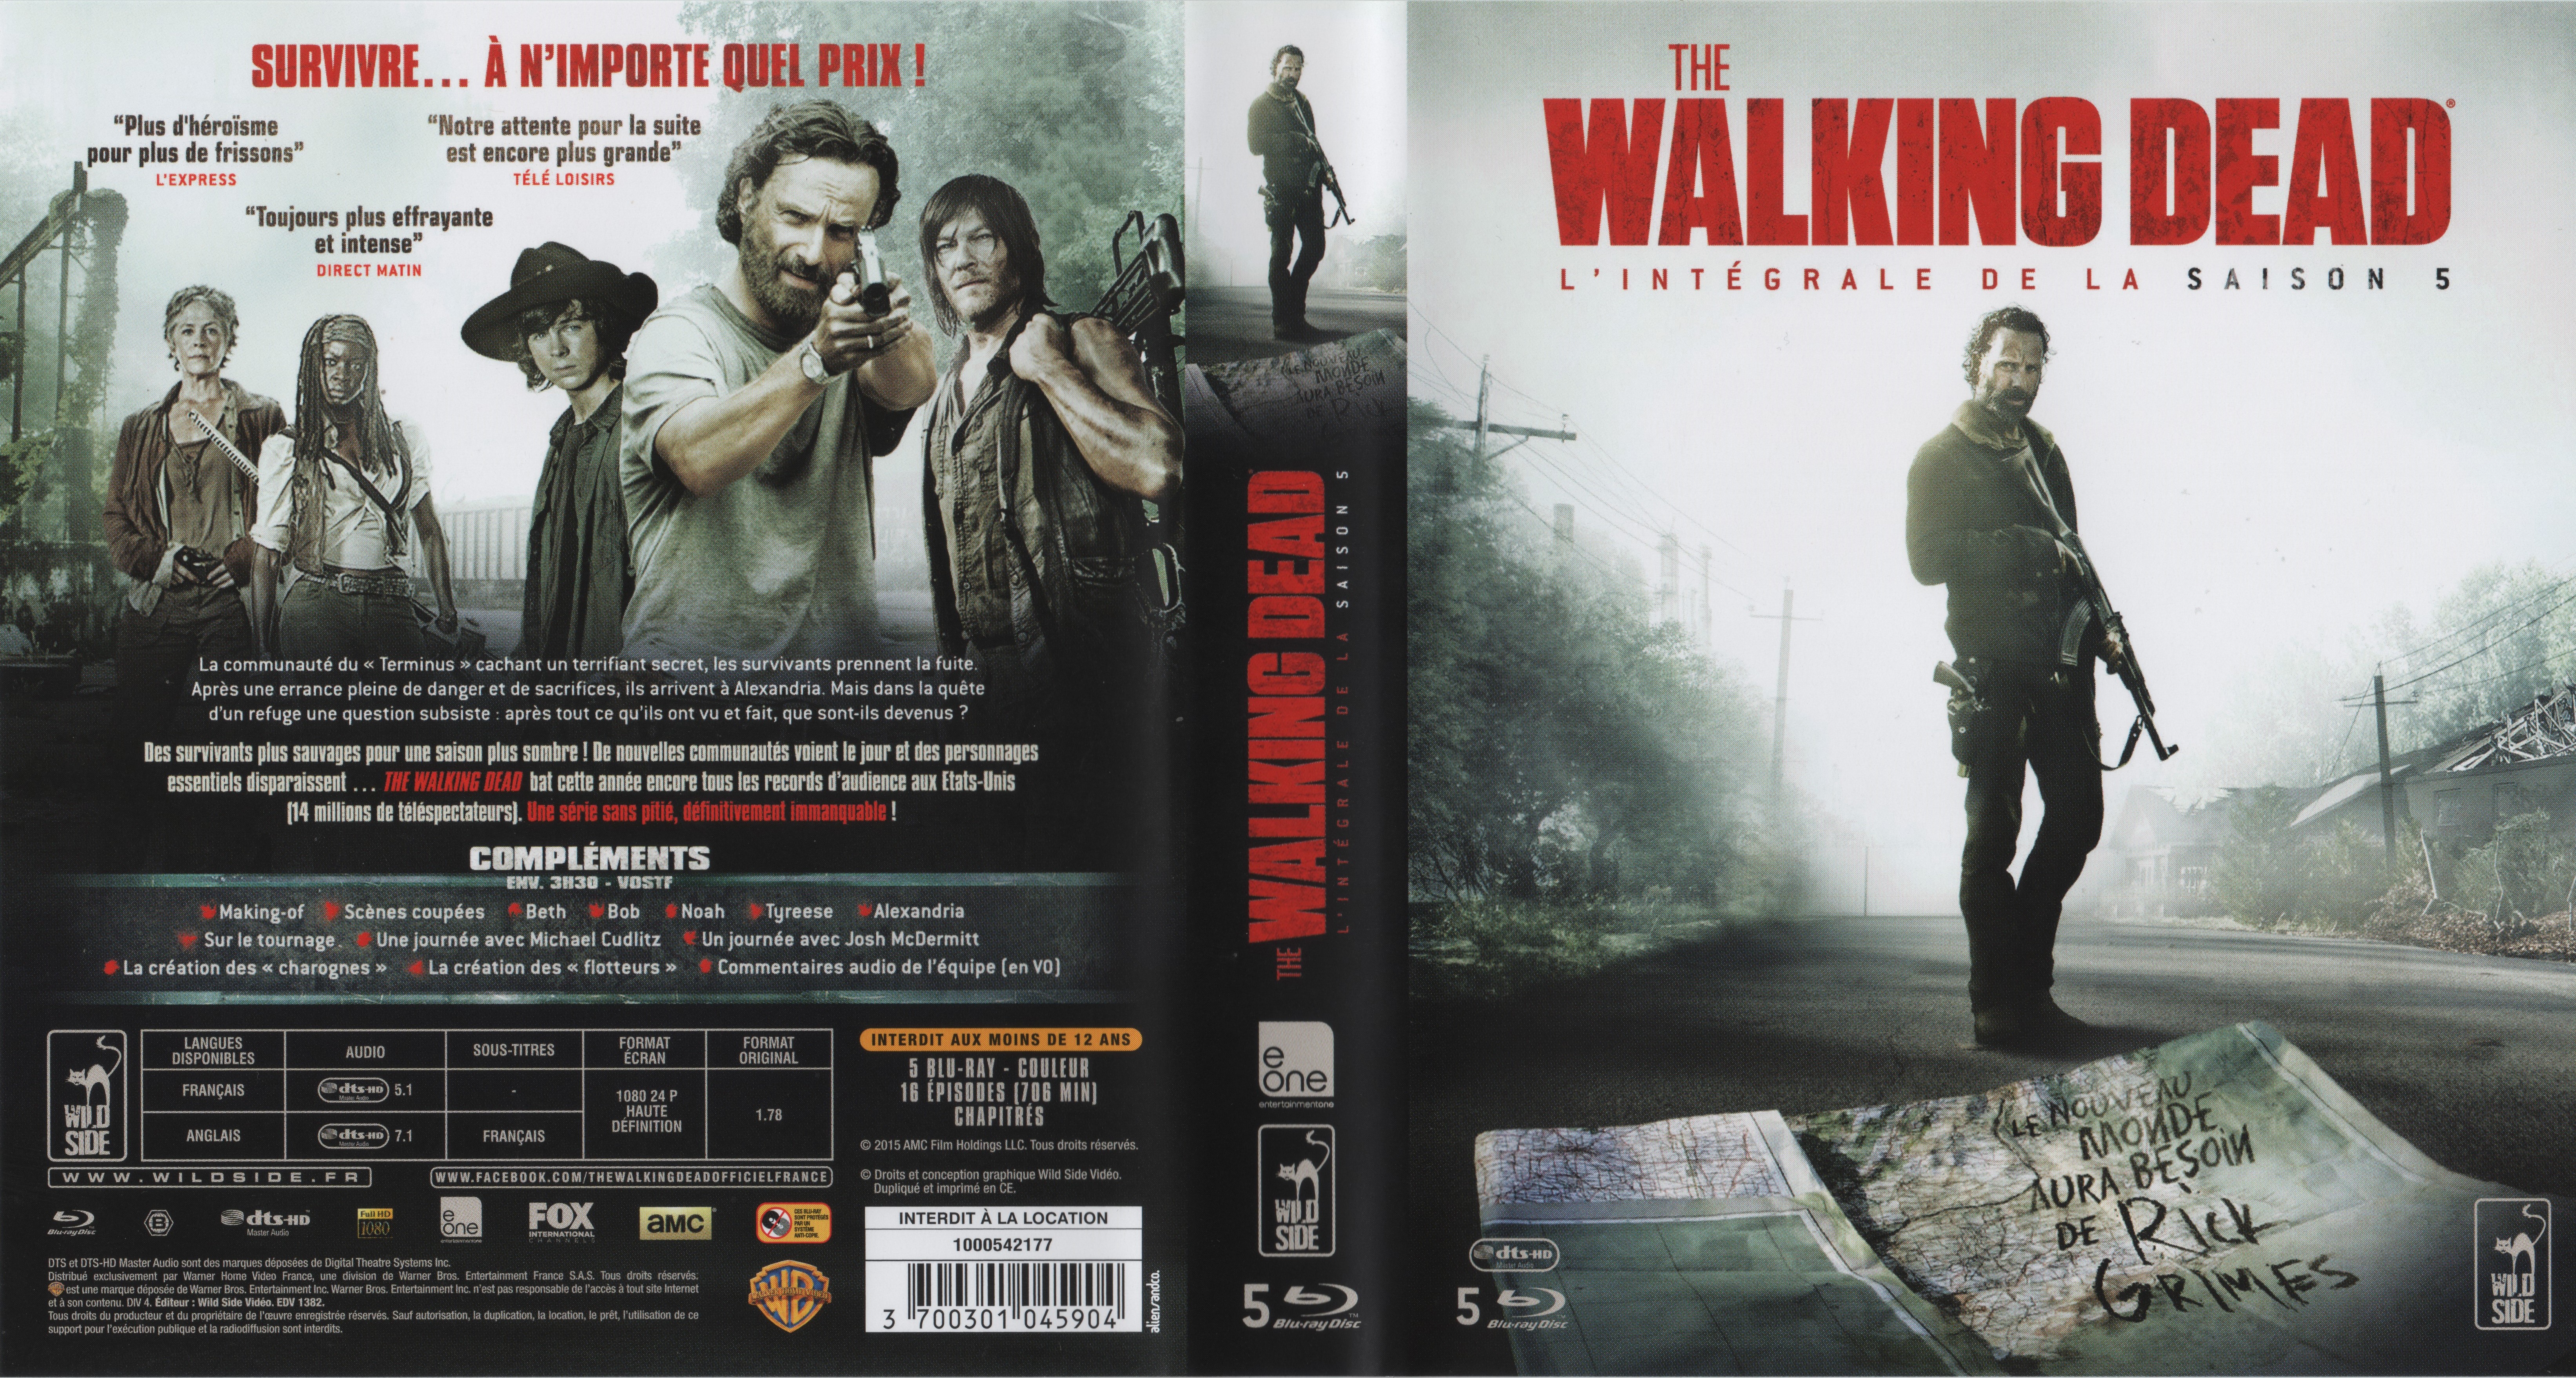 Jaquette DVD The walking dead saison 5 (BLU-RAY) v2